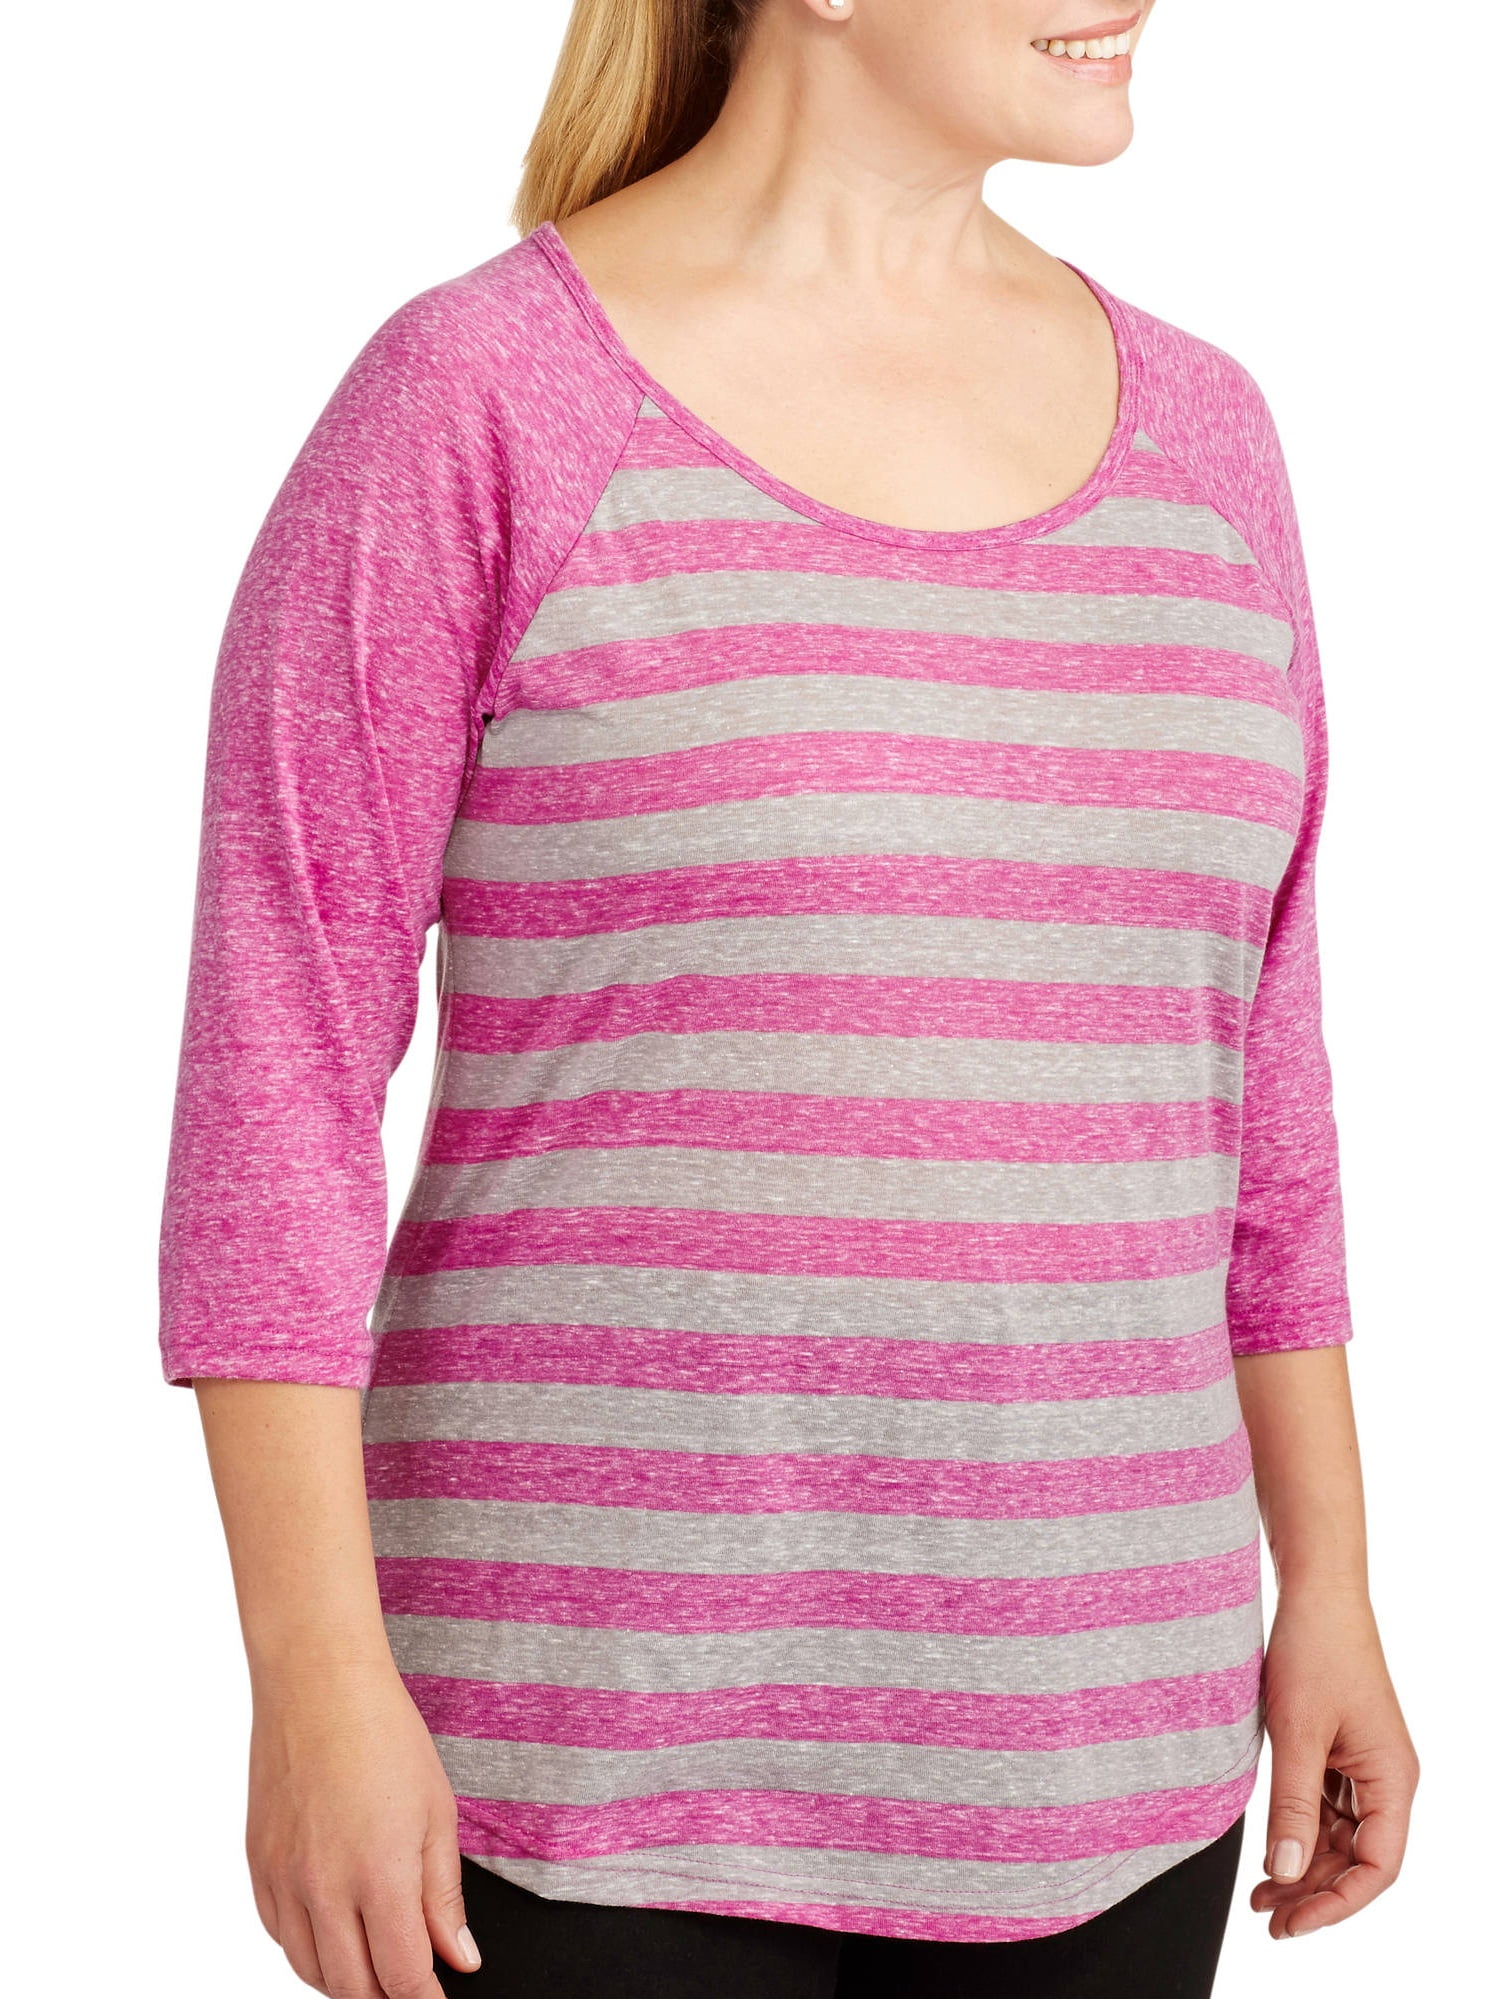 Women's Plus-Size 3/4 Raglan Sleeve Stripe Baseball Top - Walmart.com